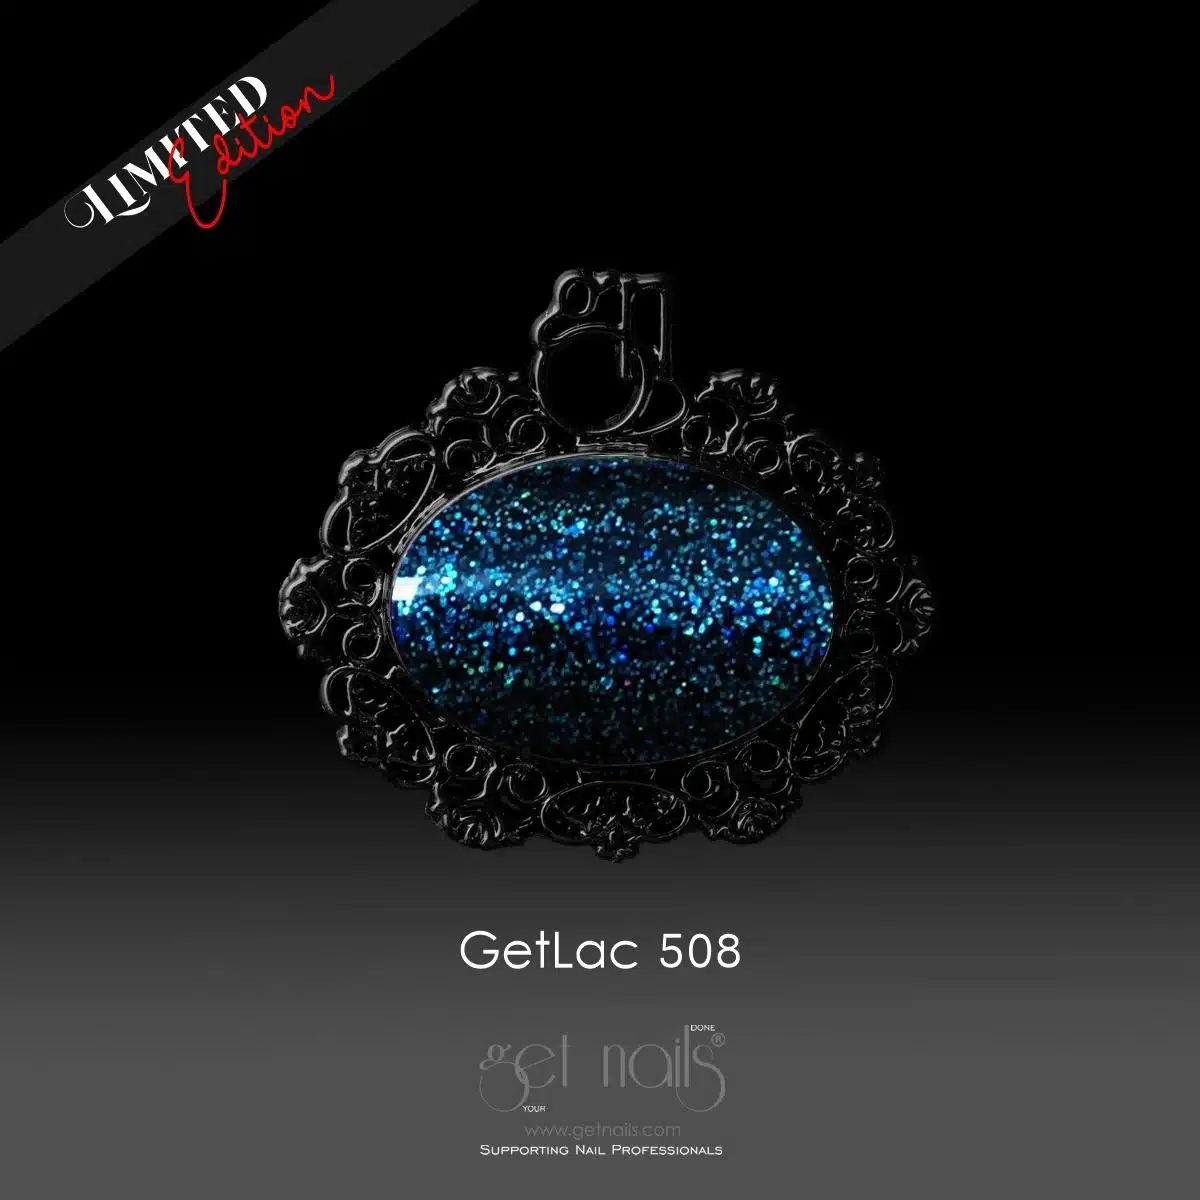 Get Nails Austria - GetLac 508 15g